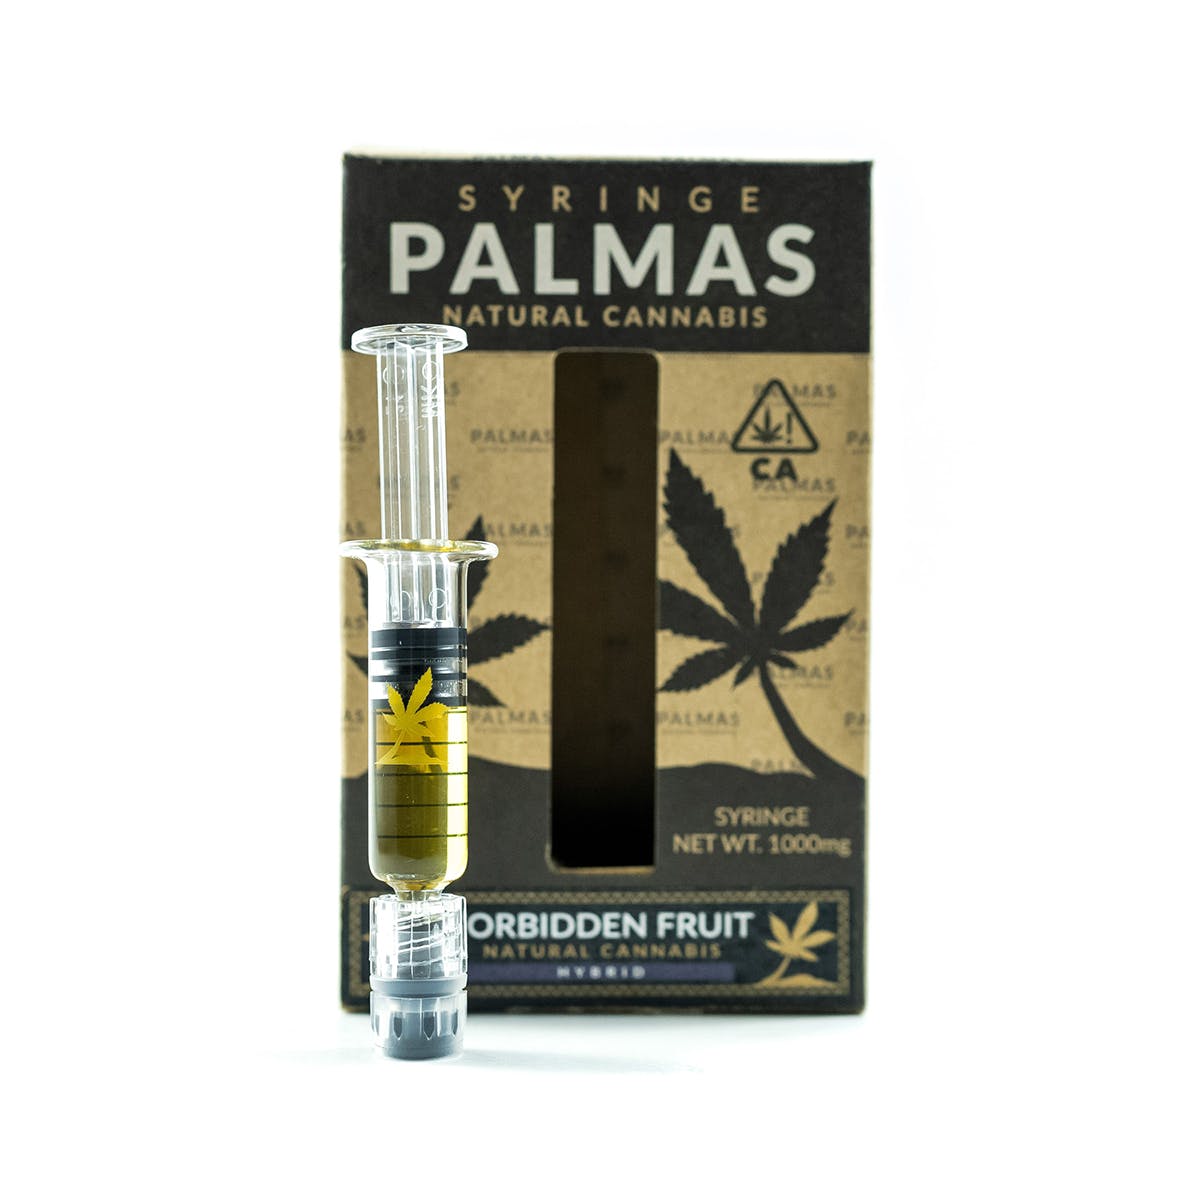 marijuana-dispensaries-white-castle-in-wilmington-palmas-syringe-forbidden-fruit-1000mg